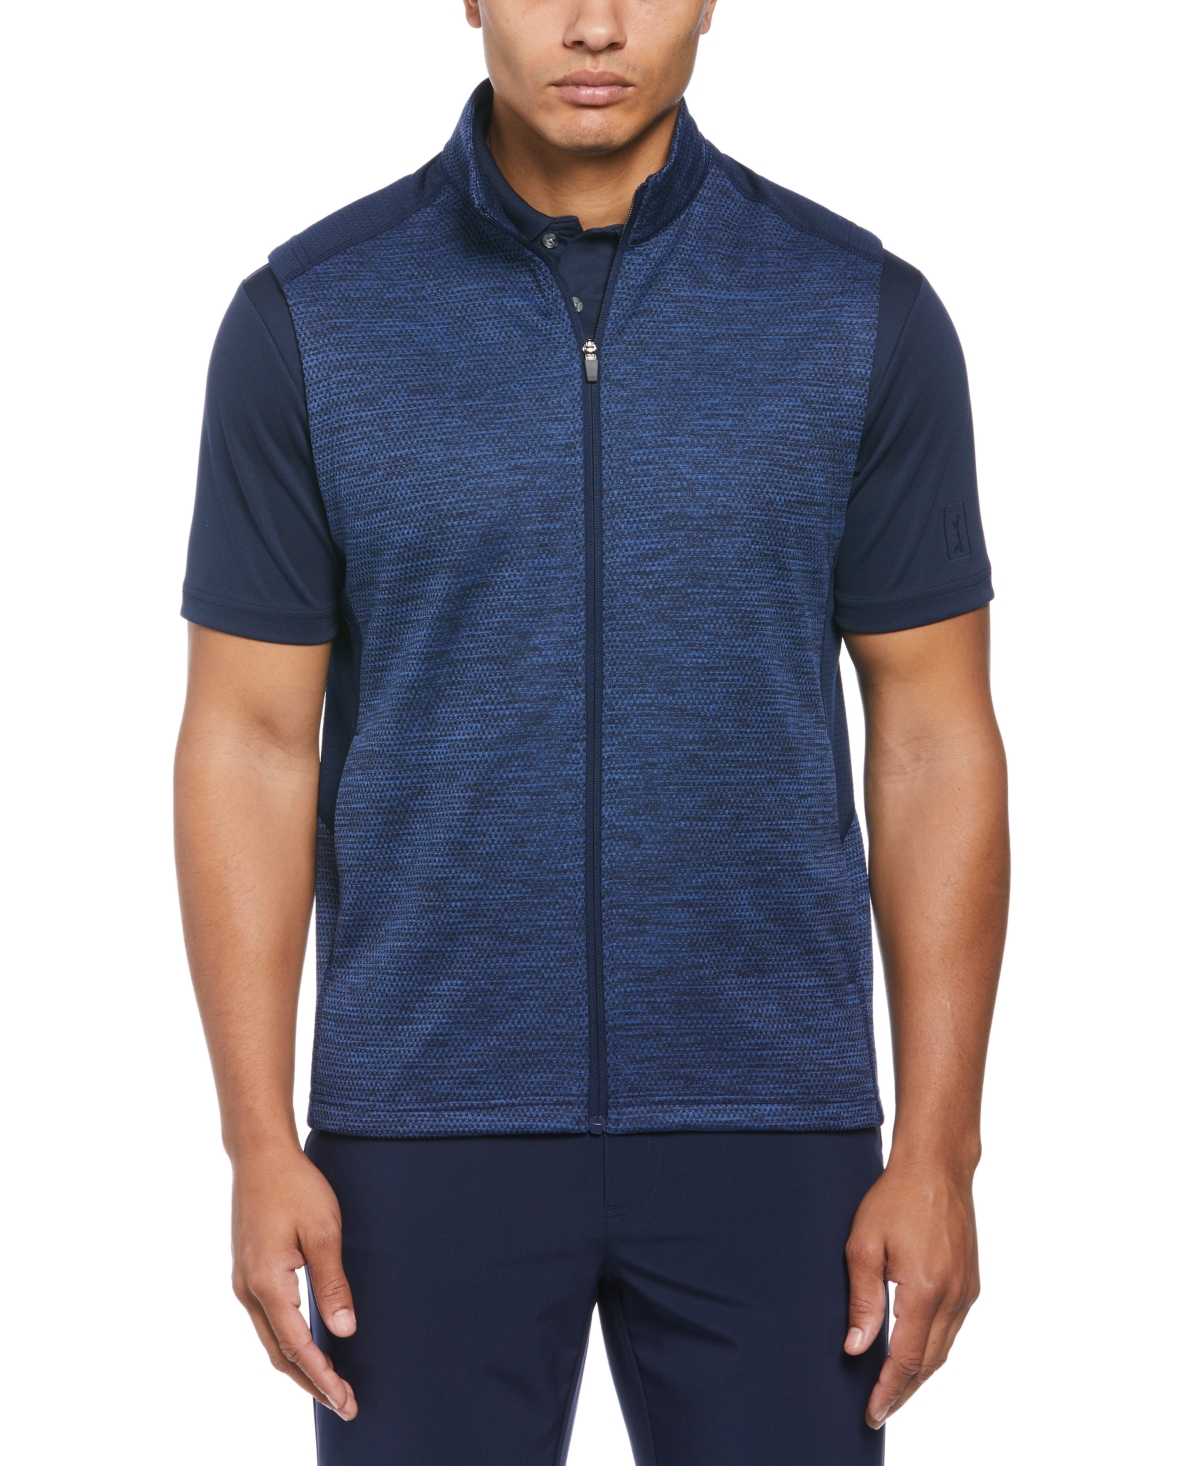 Men's Two-Tone Space-Dyed Full-Zip Golf Vest - Peacoat Heather